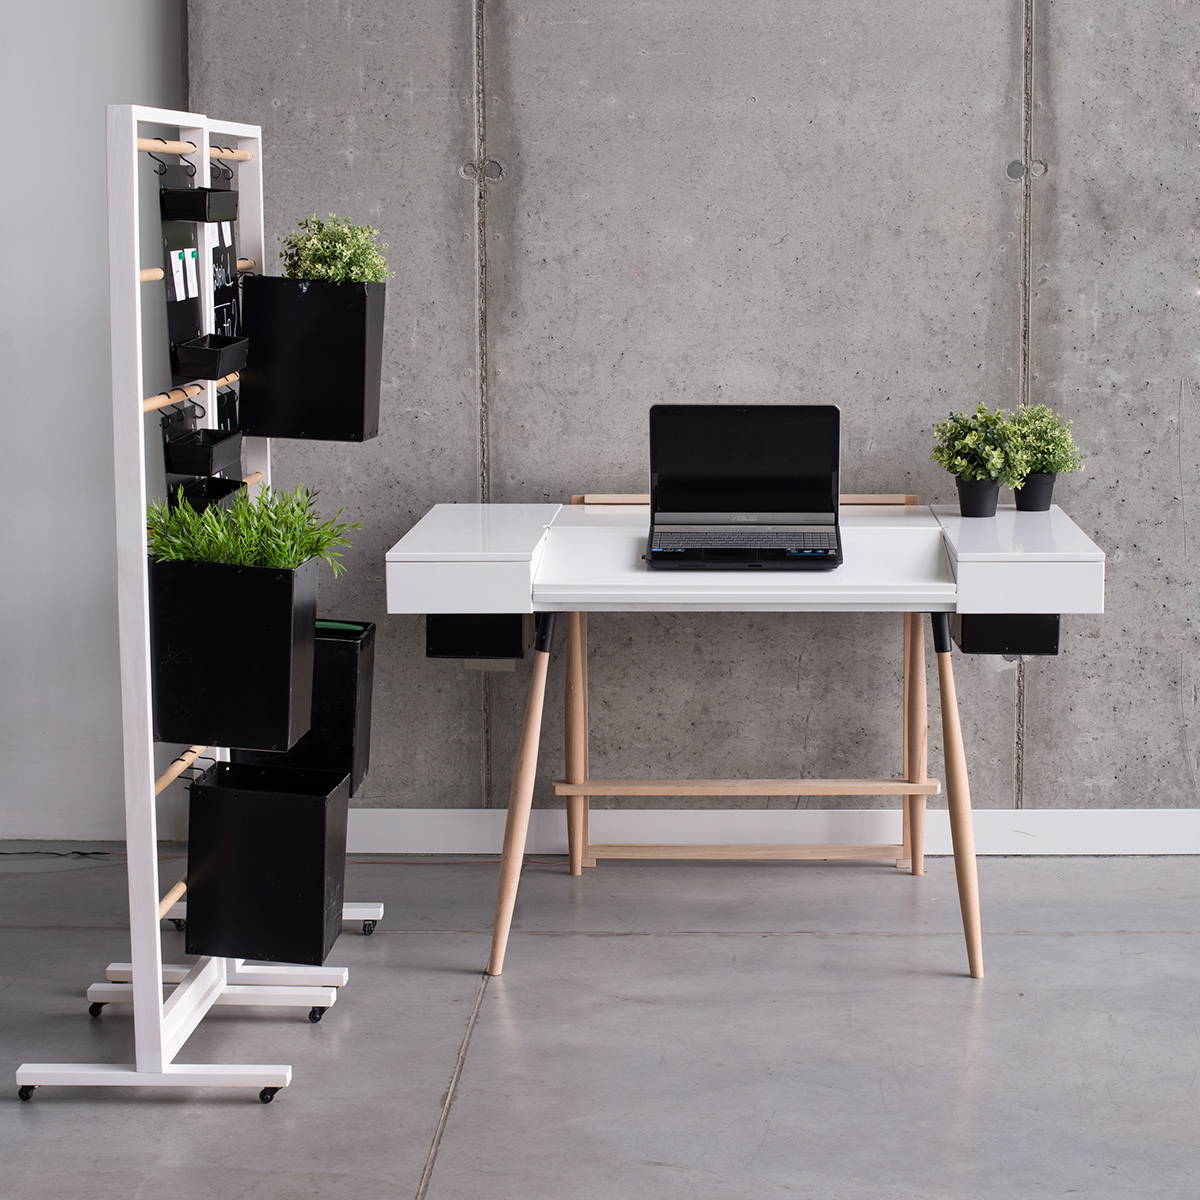 desk Work  Office design table homeoffice workspace workplace furniture design to work openspace LOFT